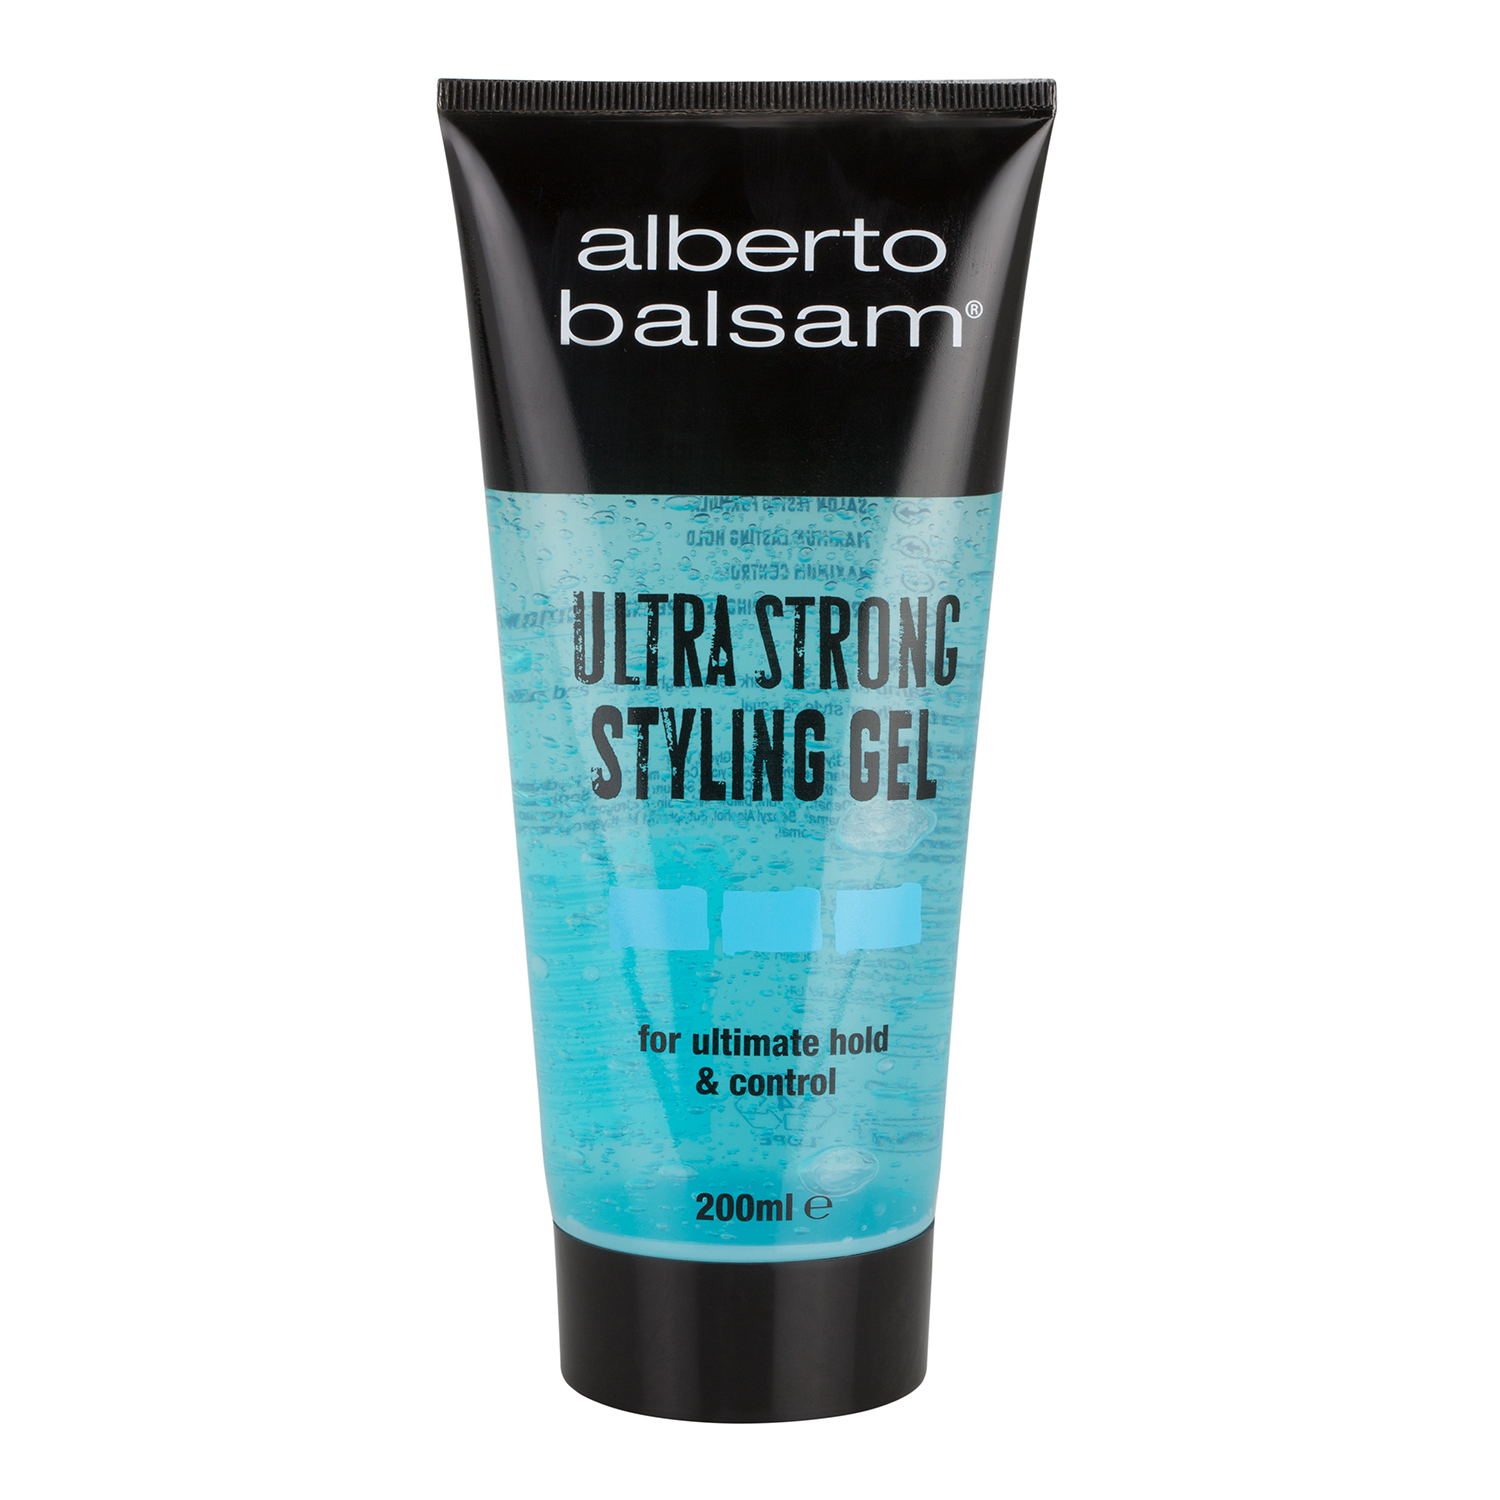 Alberto Balsam Ultra Strong Styling Gel Image